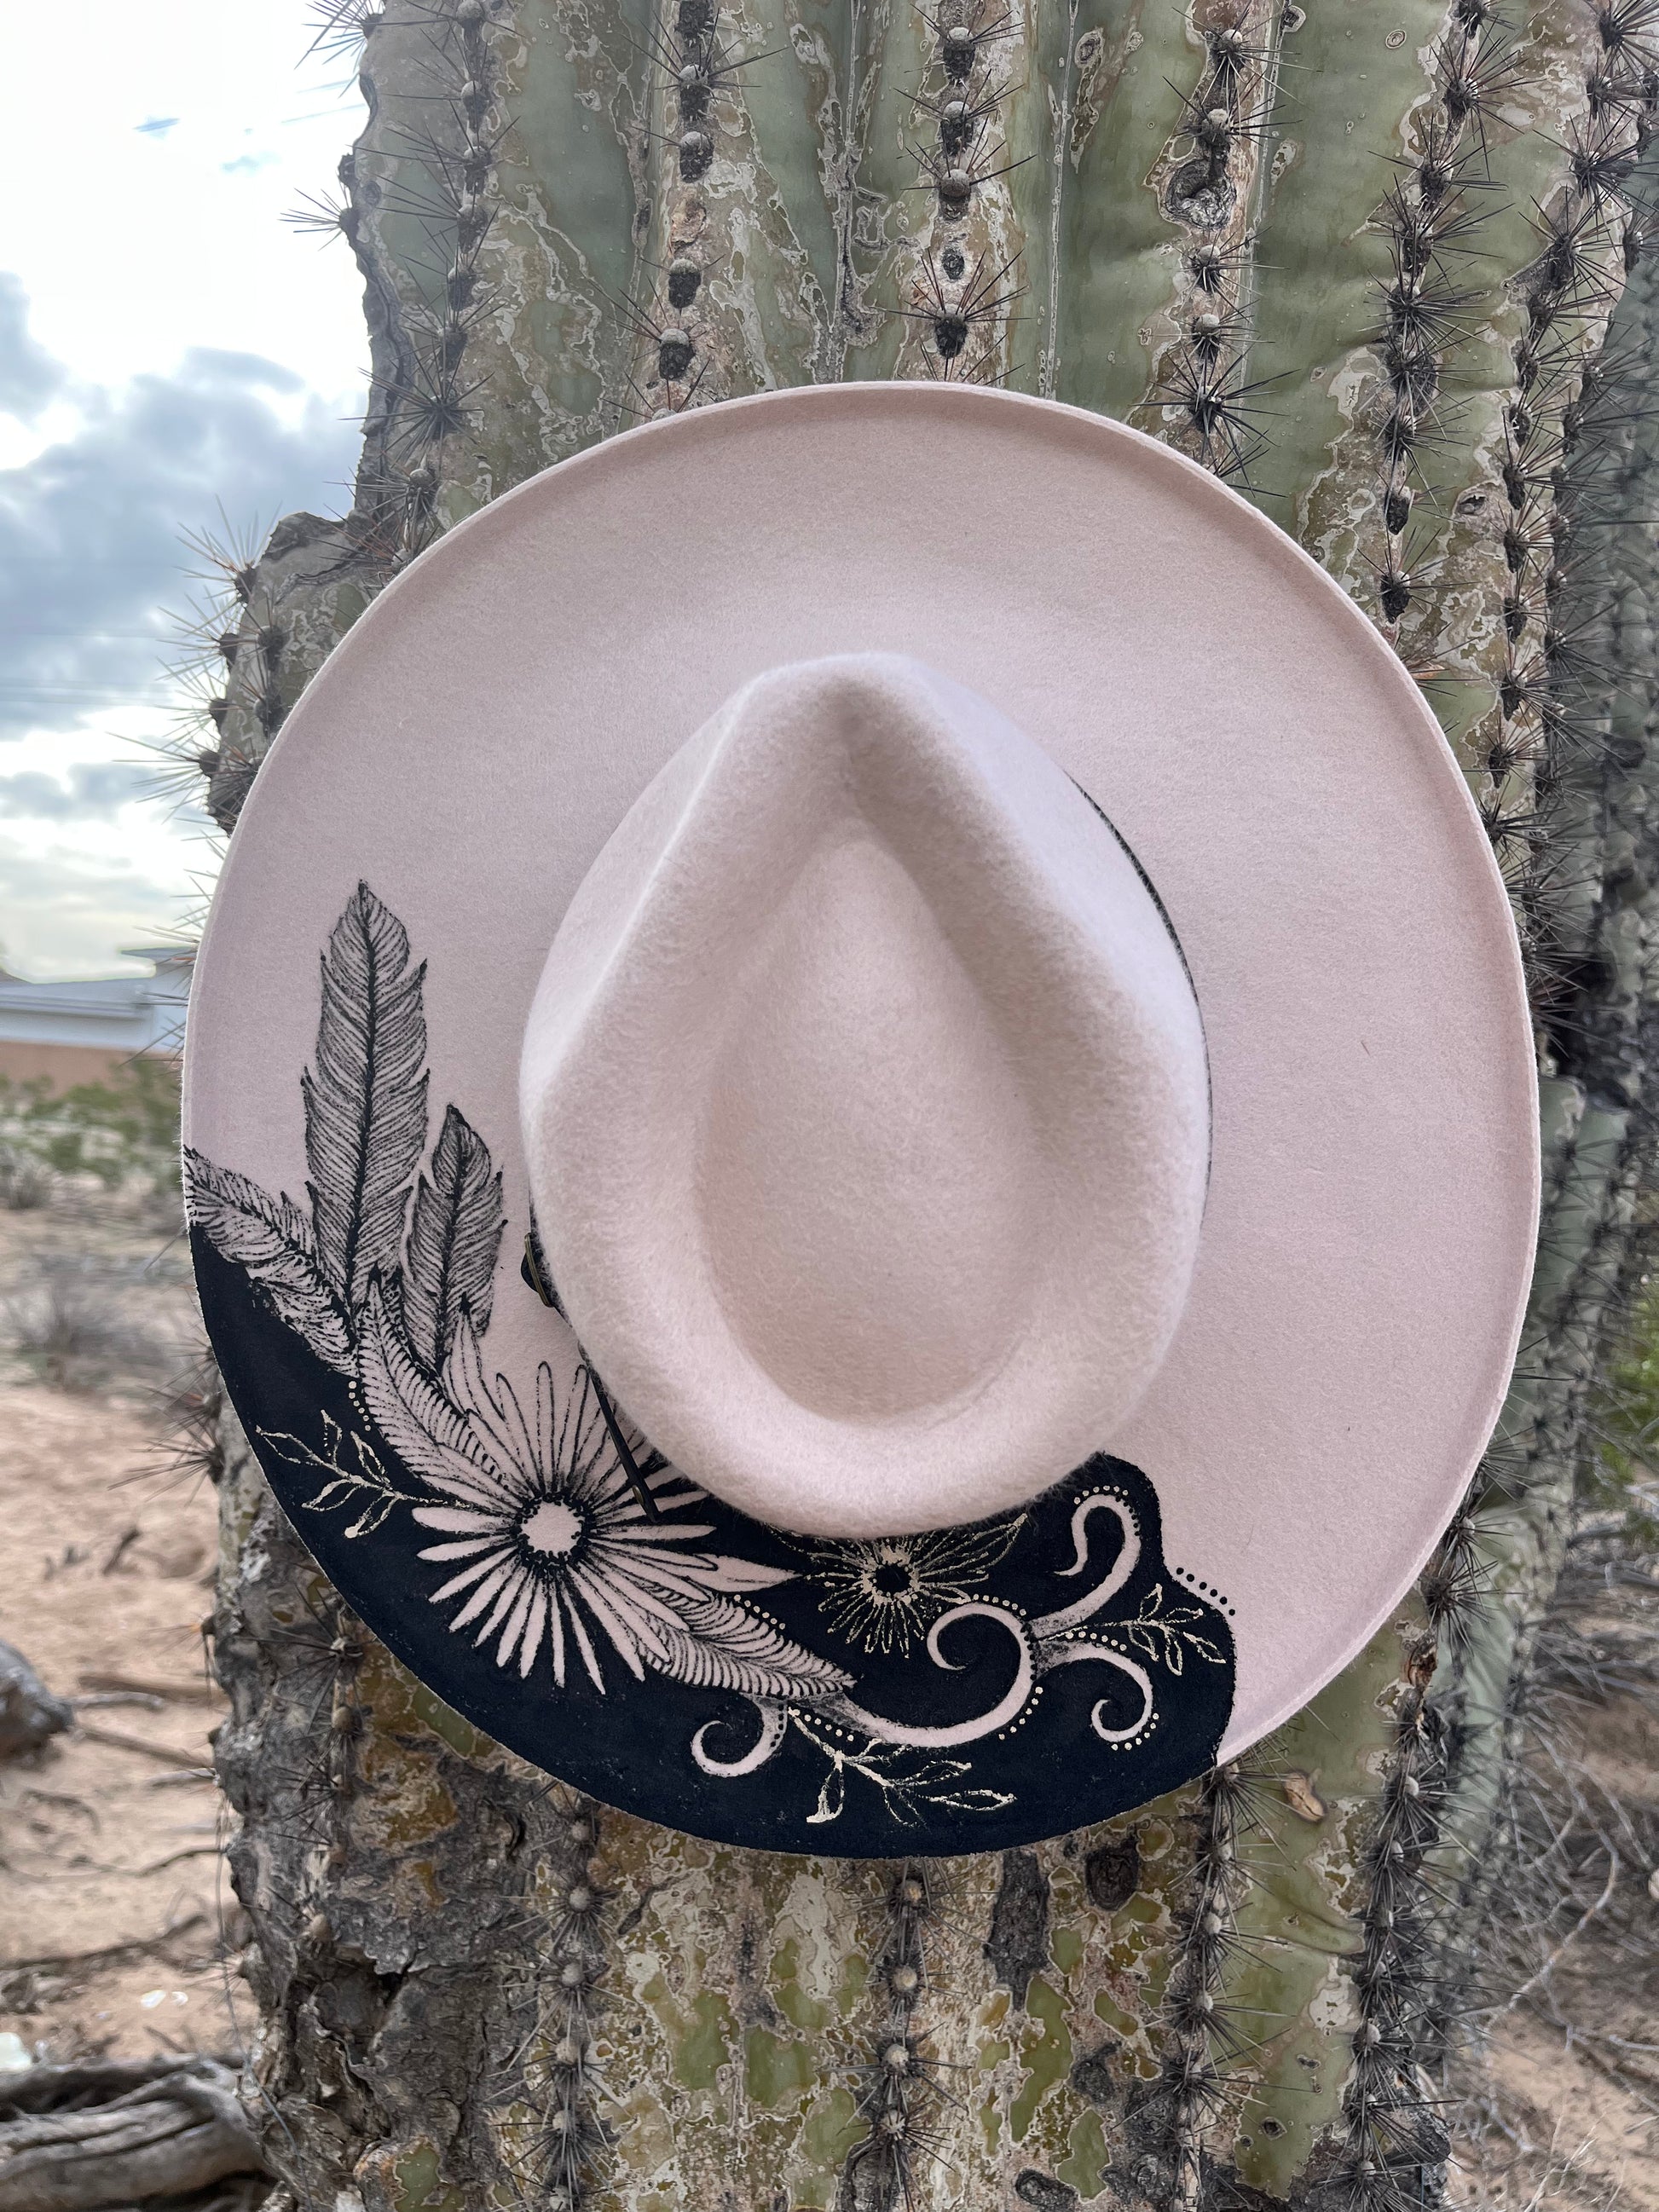 Felt Rancher Hat